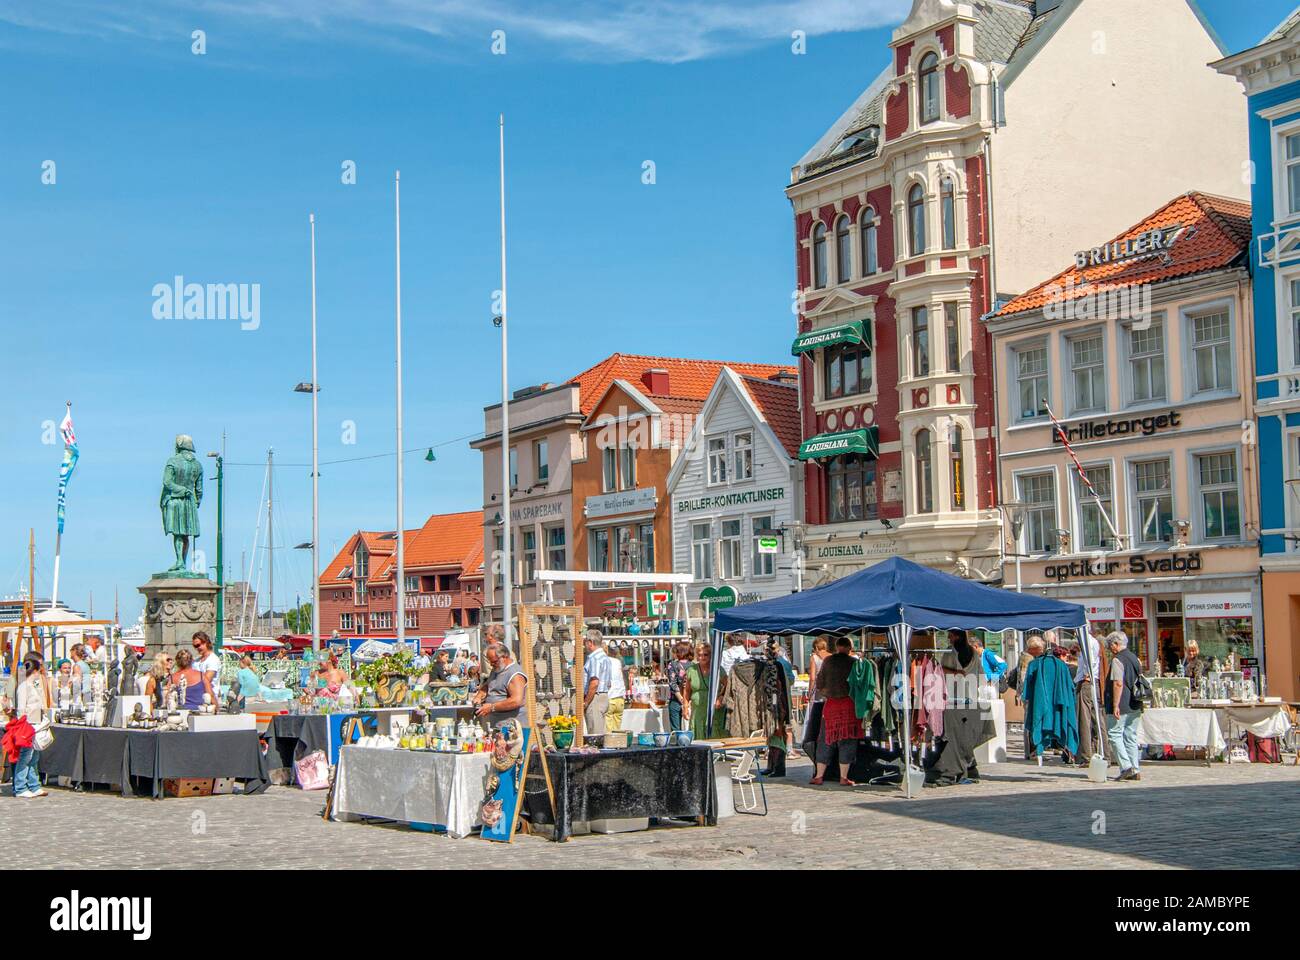 Flea market in downtown Bergen, Norway Stock Photo